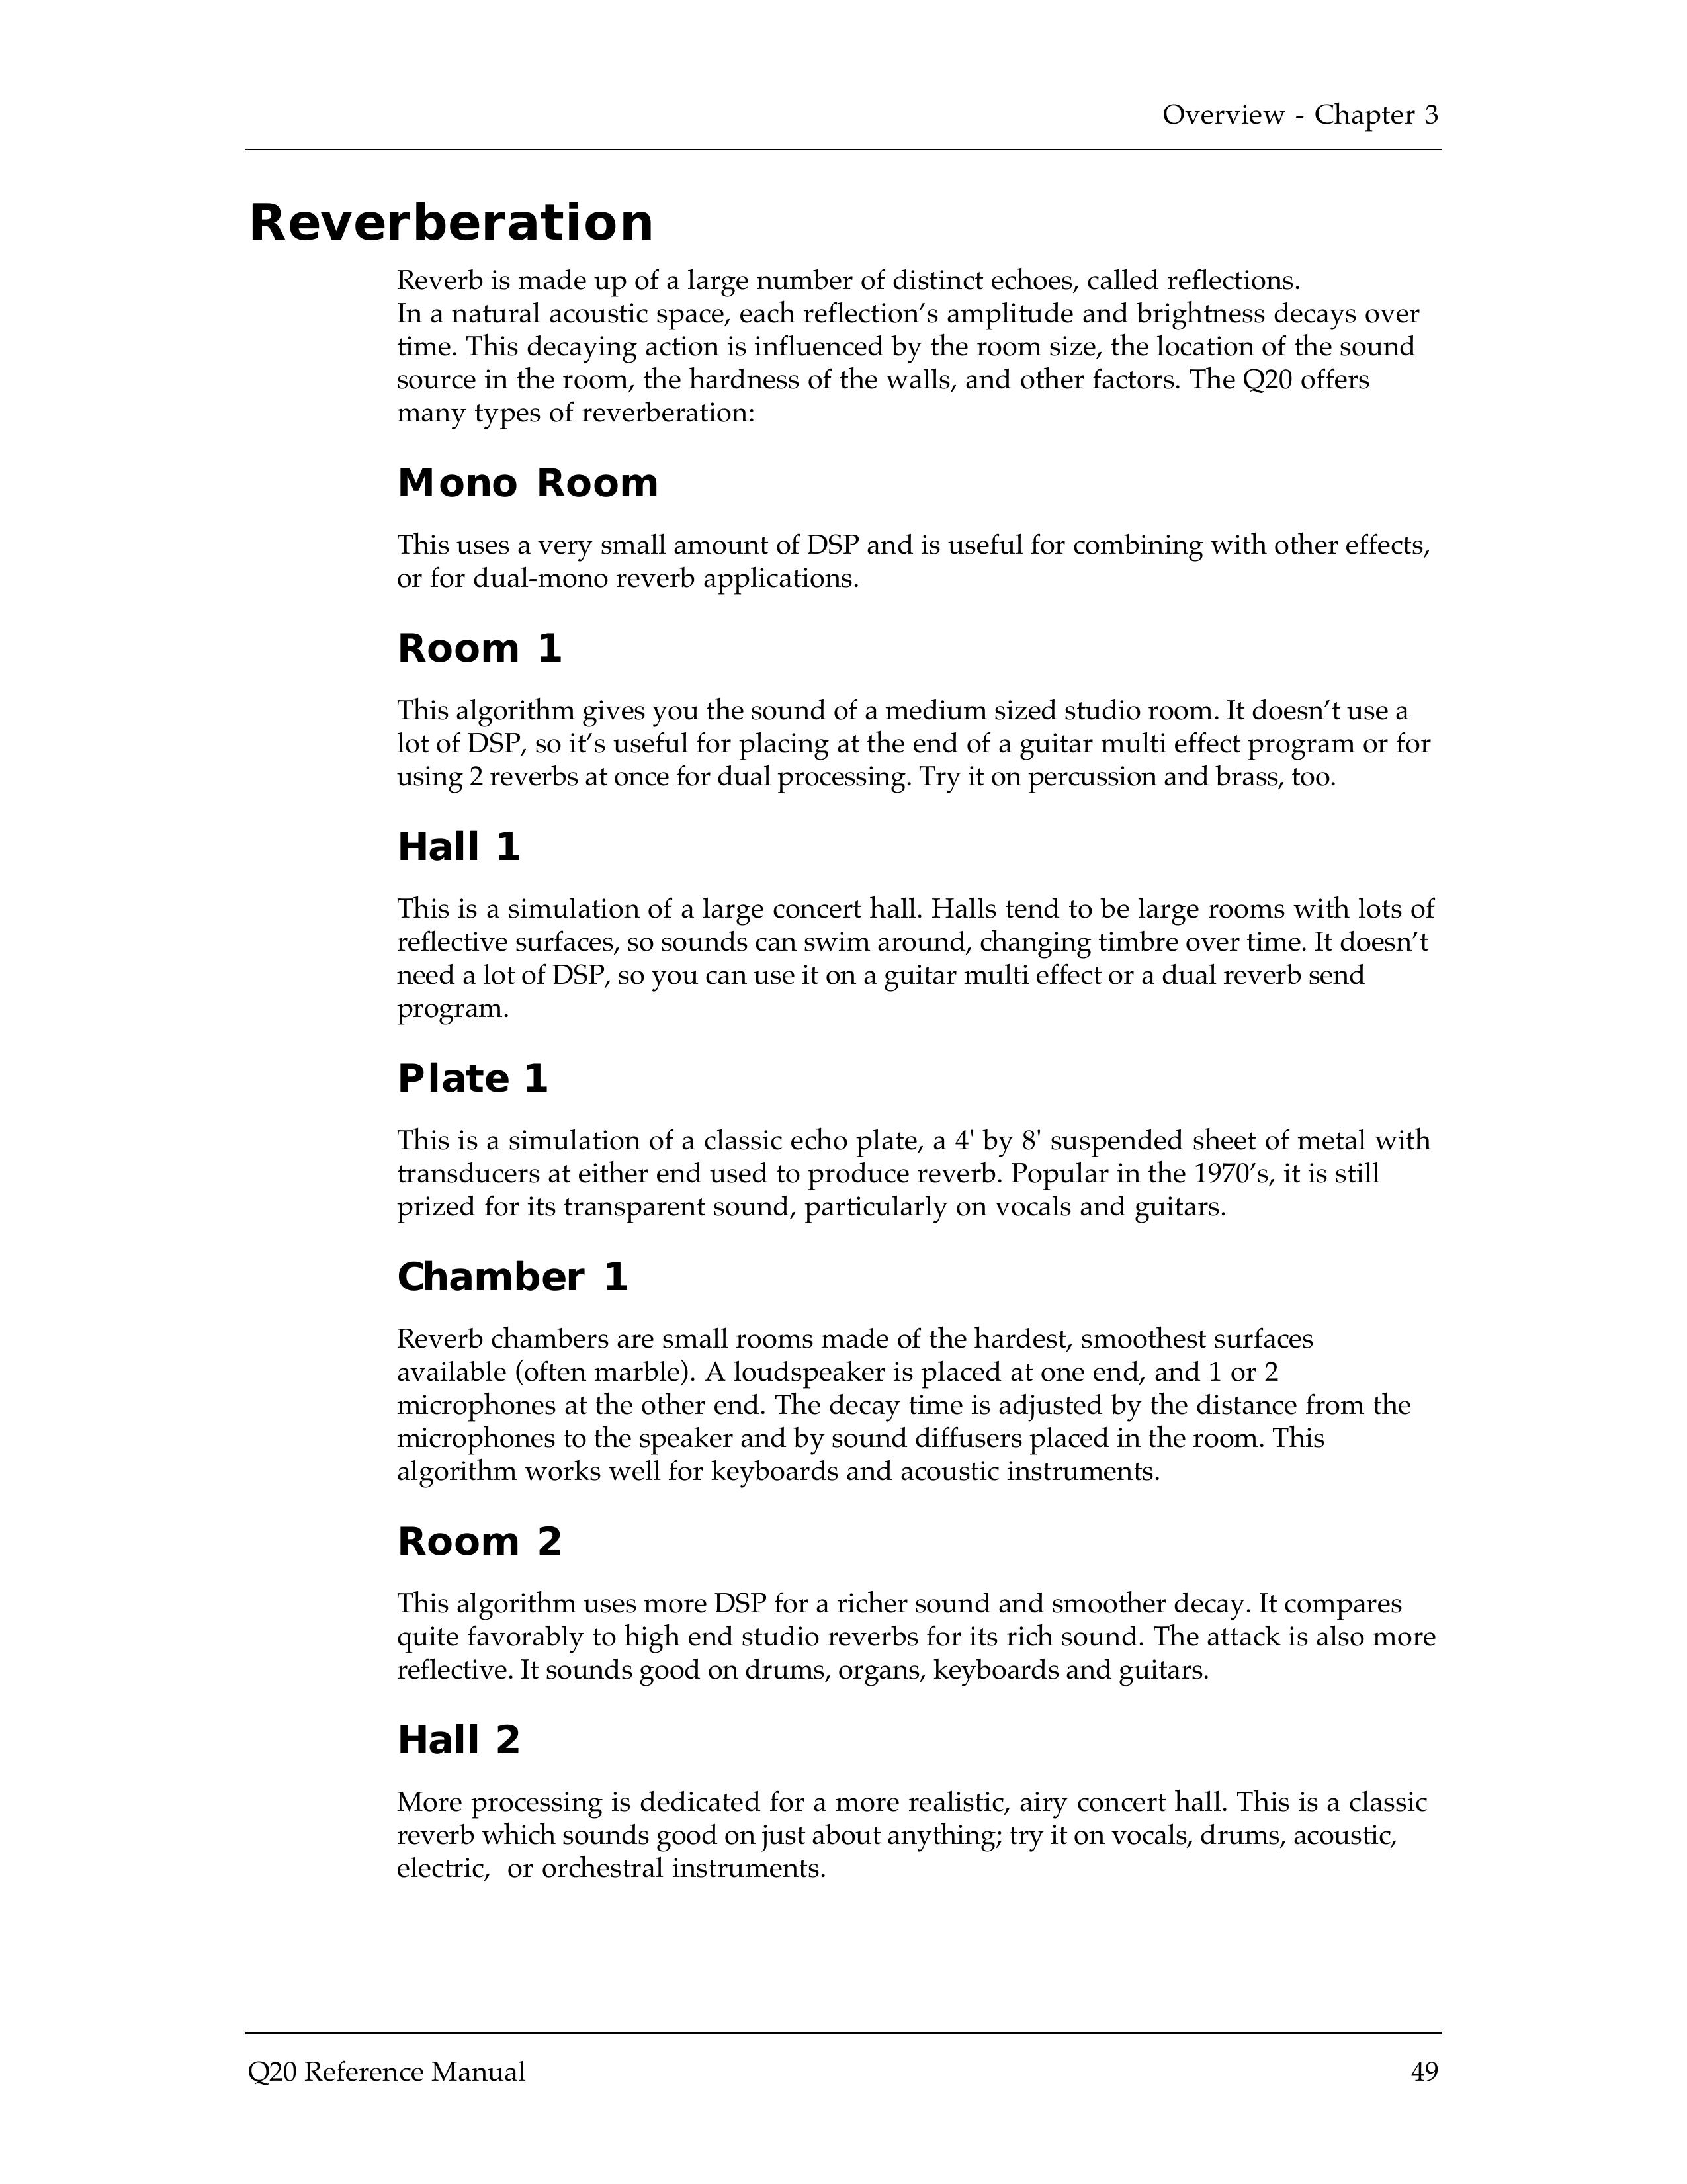 Alesis Q20 DJ Equipment User Manual (Page 51)